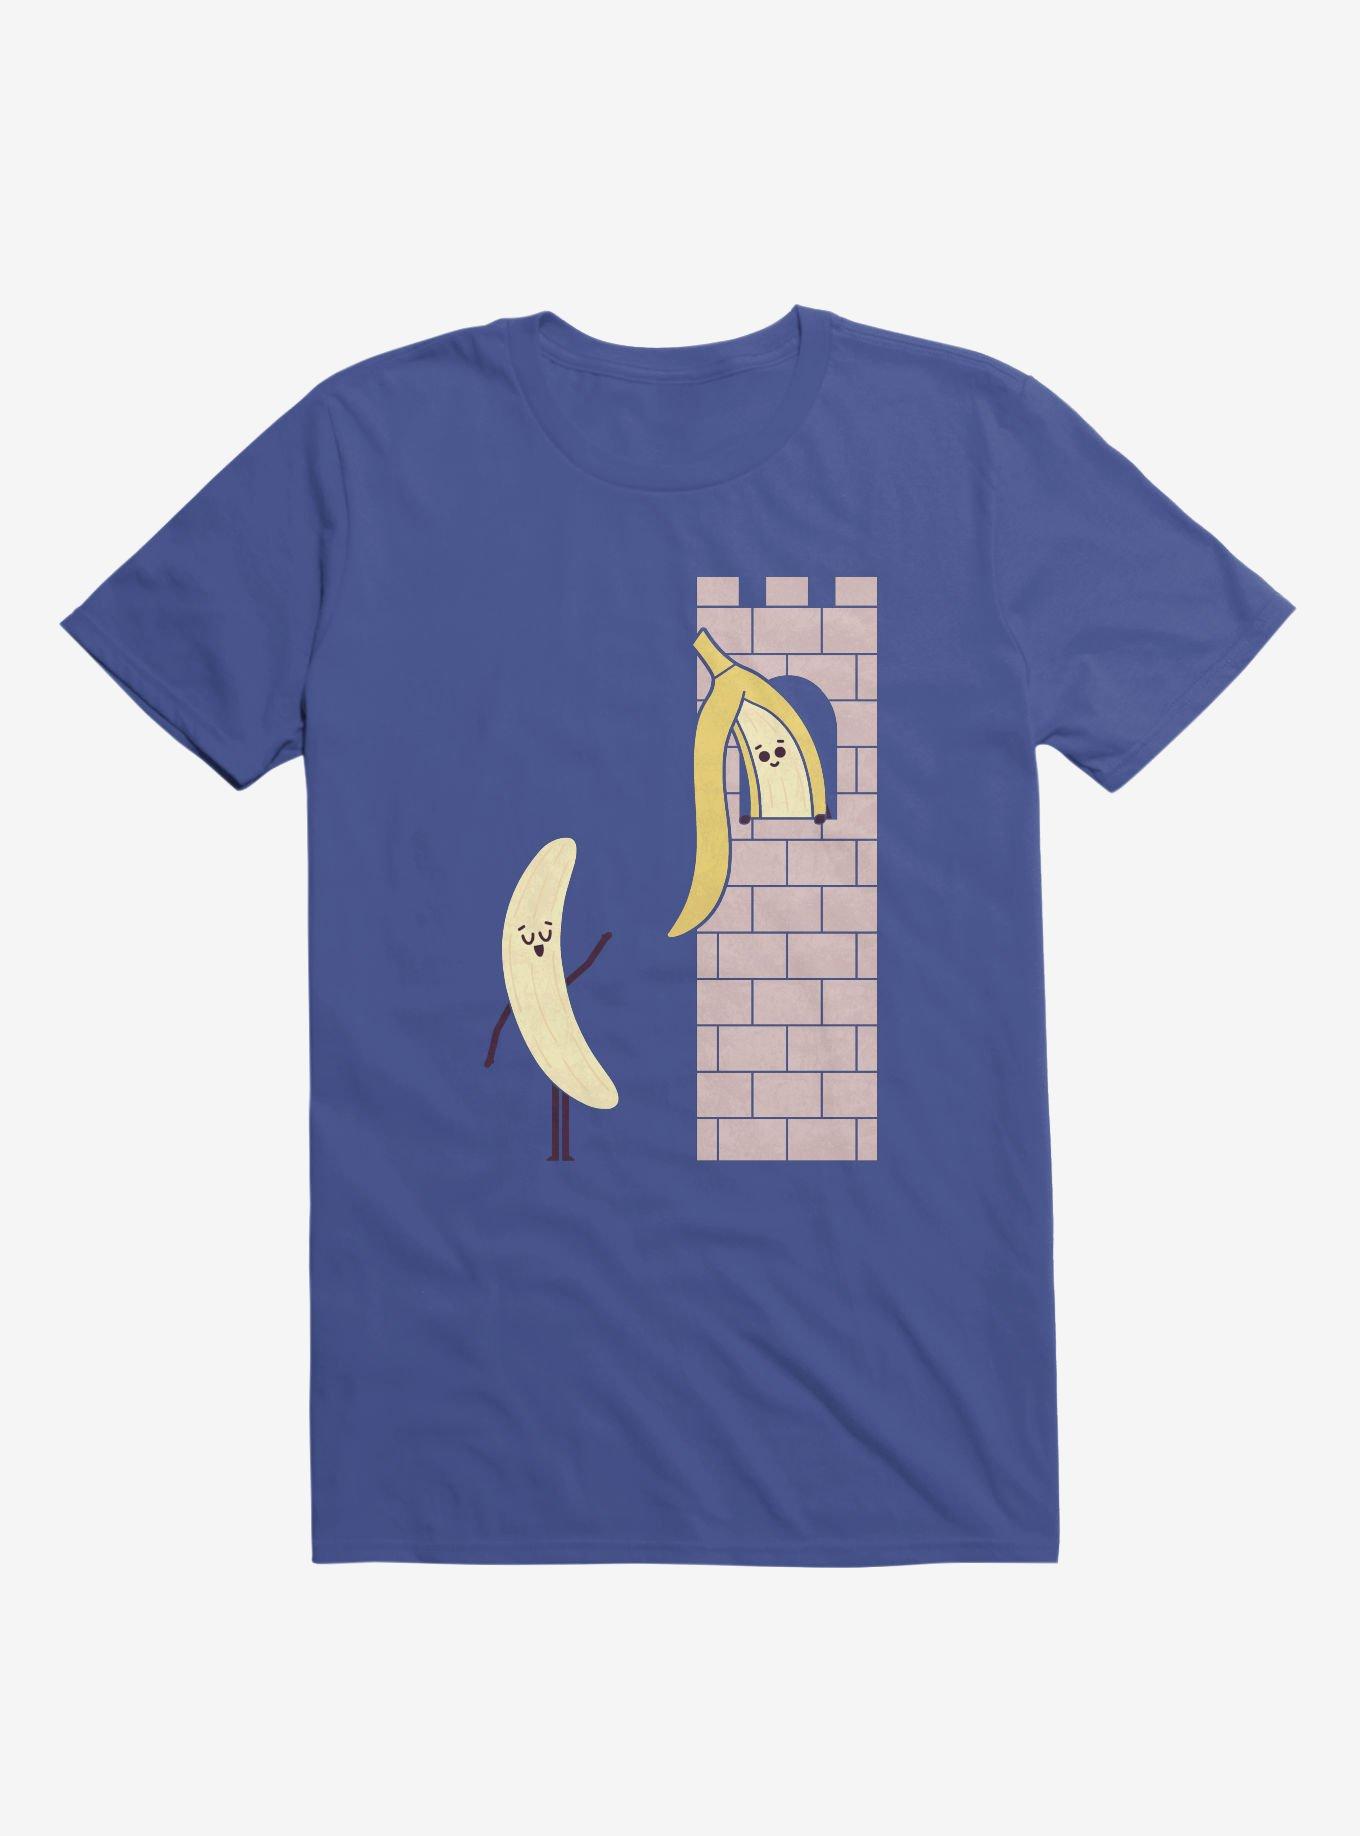 Let Down Your Peel Banana In Castle Royal Blue T-Shirt, ROYAL, hi-res